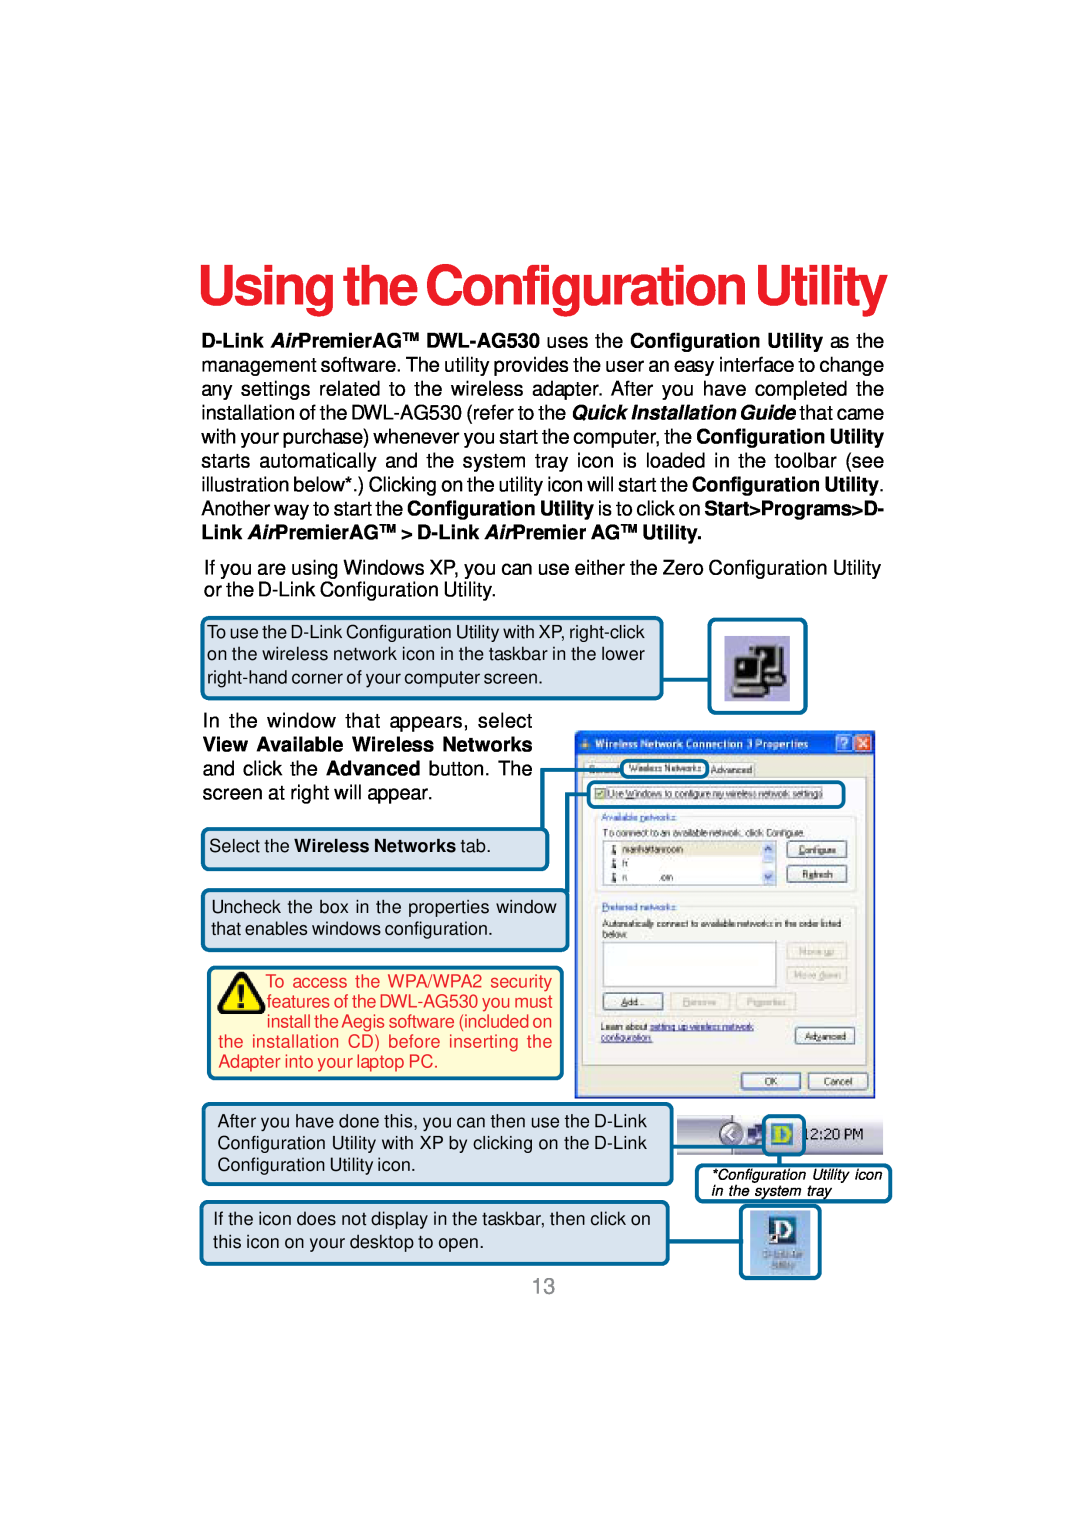 D-Link DWL-AG530 manual UsingtheConfigurationUtility, Link AirPremierAGTM D-Link AirPremier AGTM Utility 